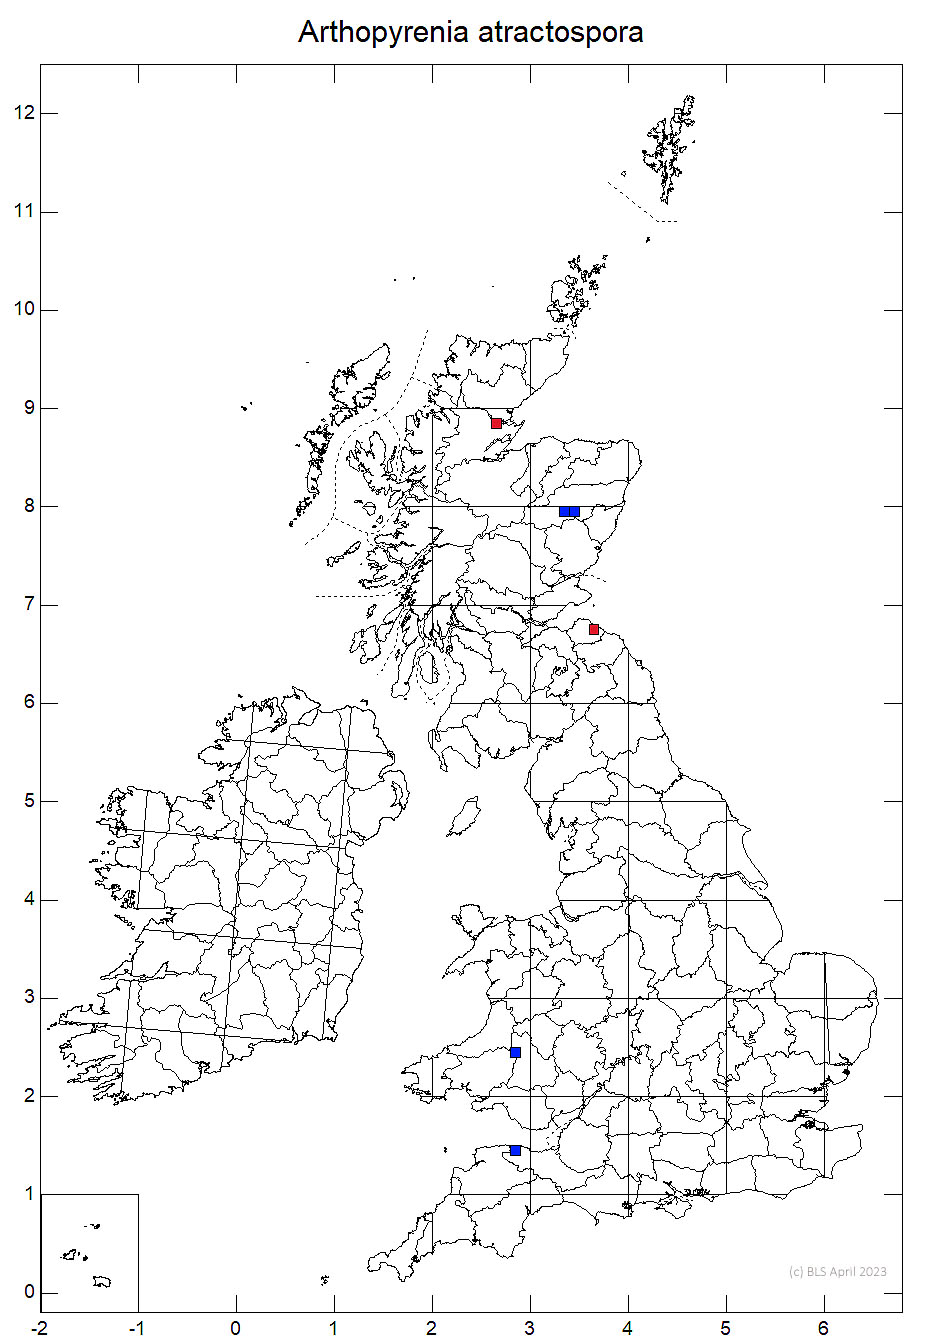 Arthopyrenia atractospora 10km sq distribution map